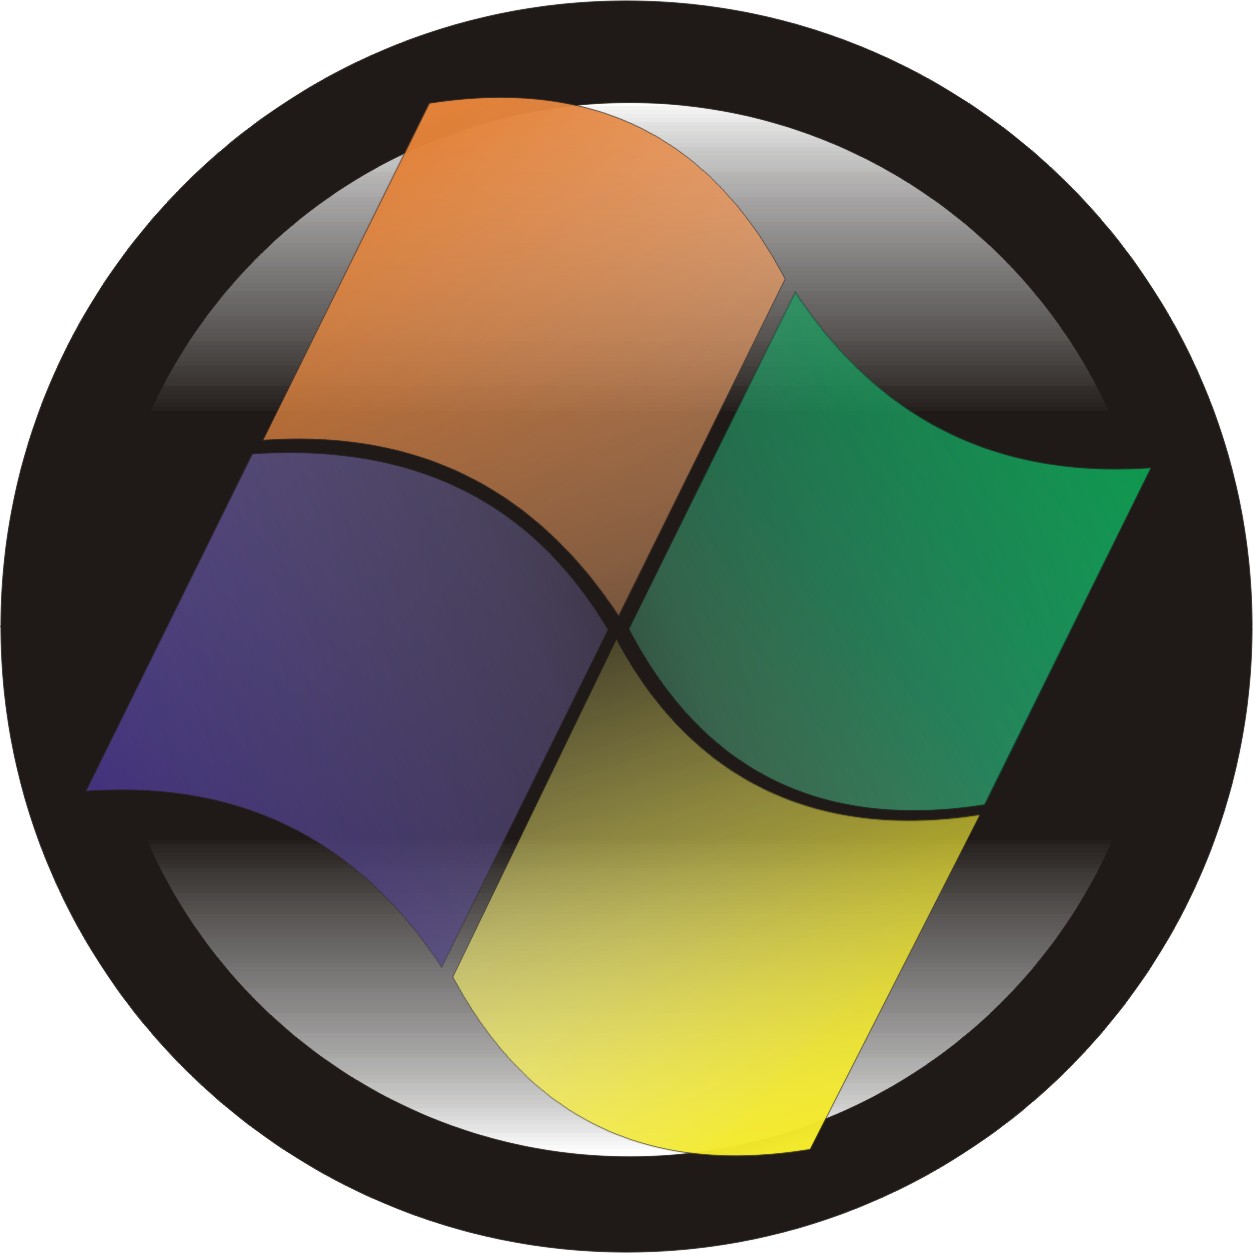 SJCTGJ-2: Windows Icon Project